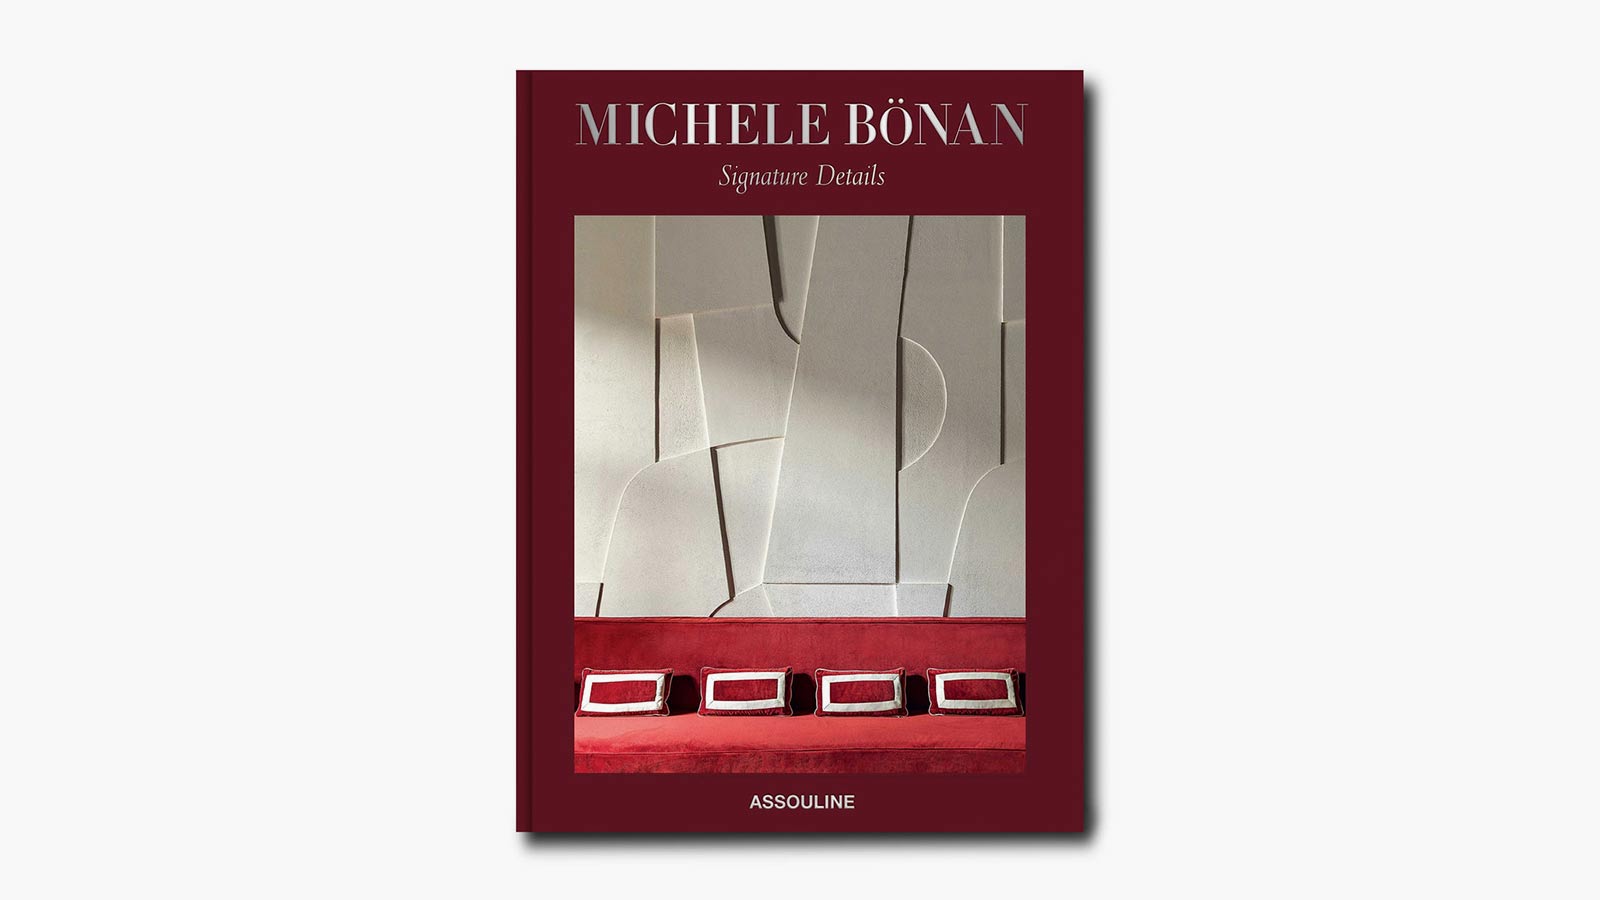 'Michele Bönan: Signature Details'